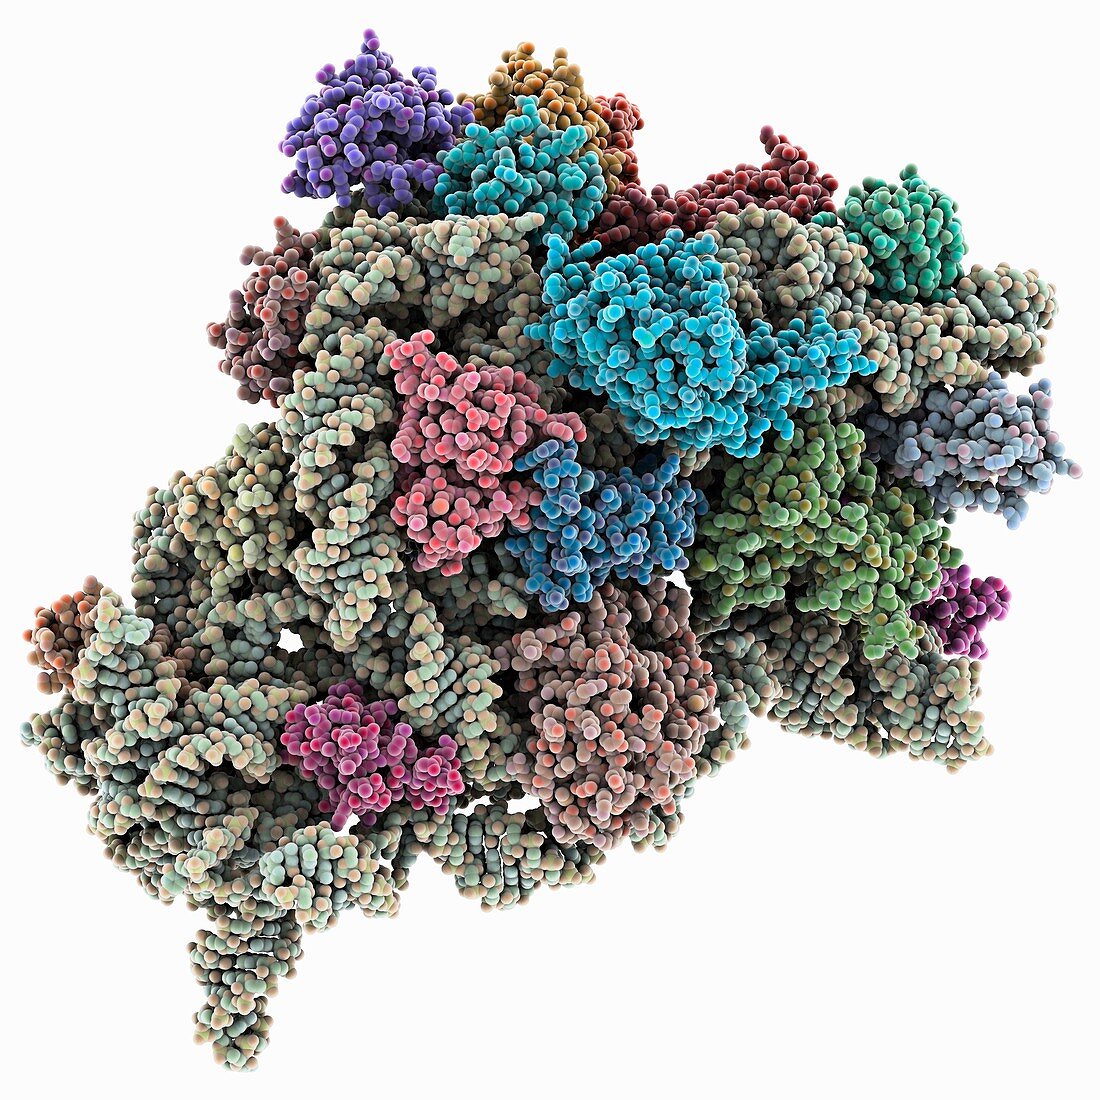 Bacterial ribosome,molecular model